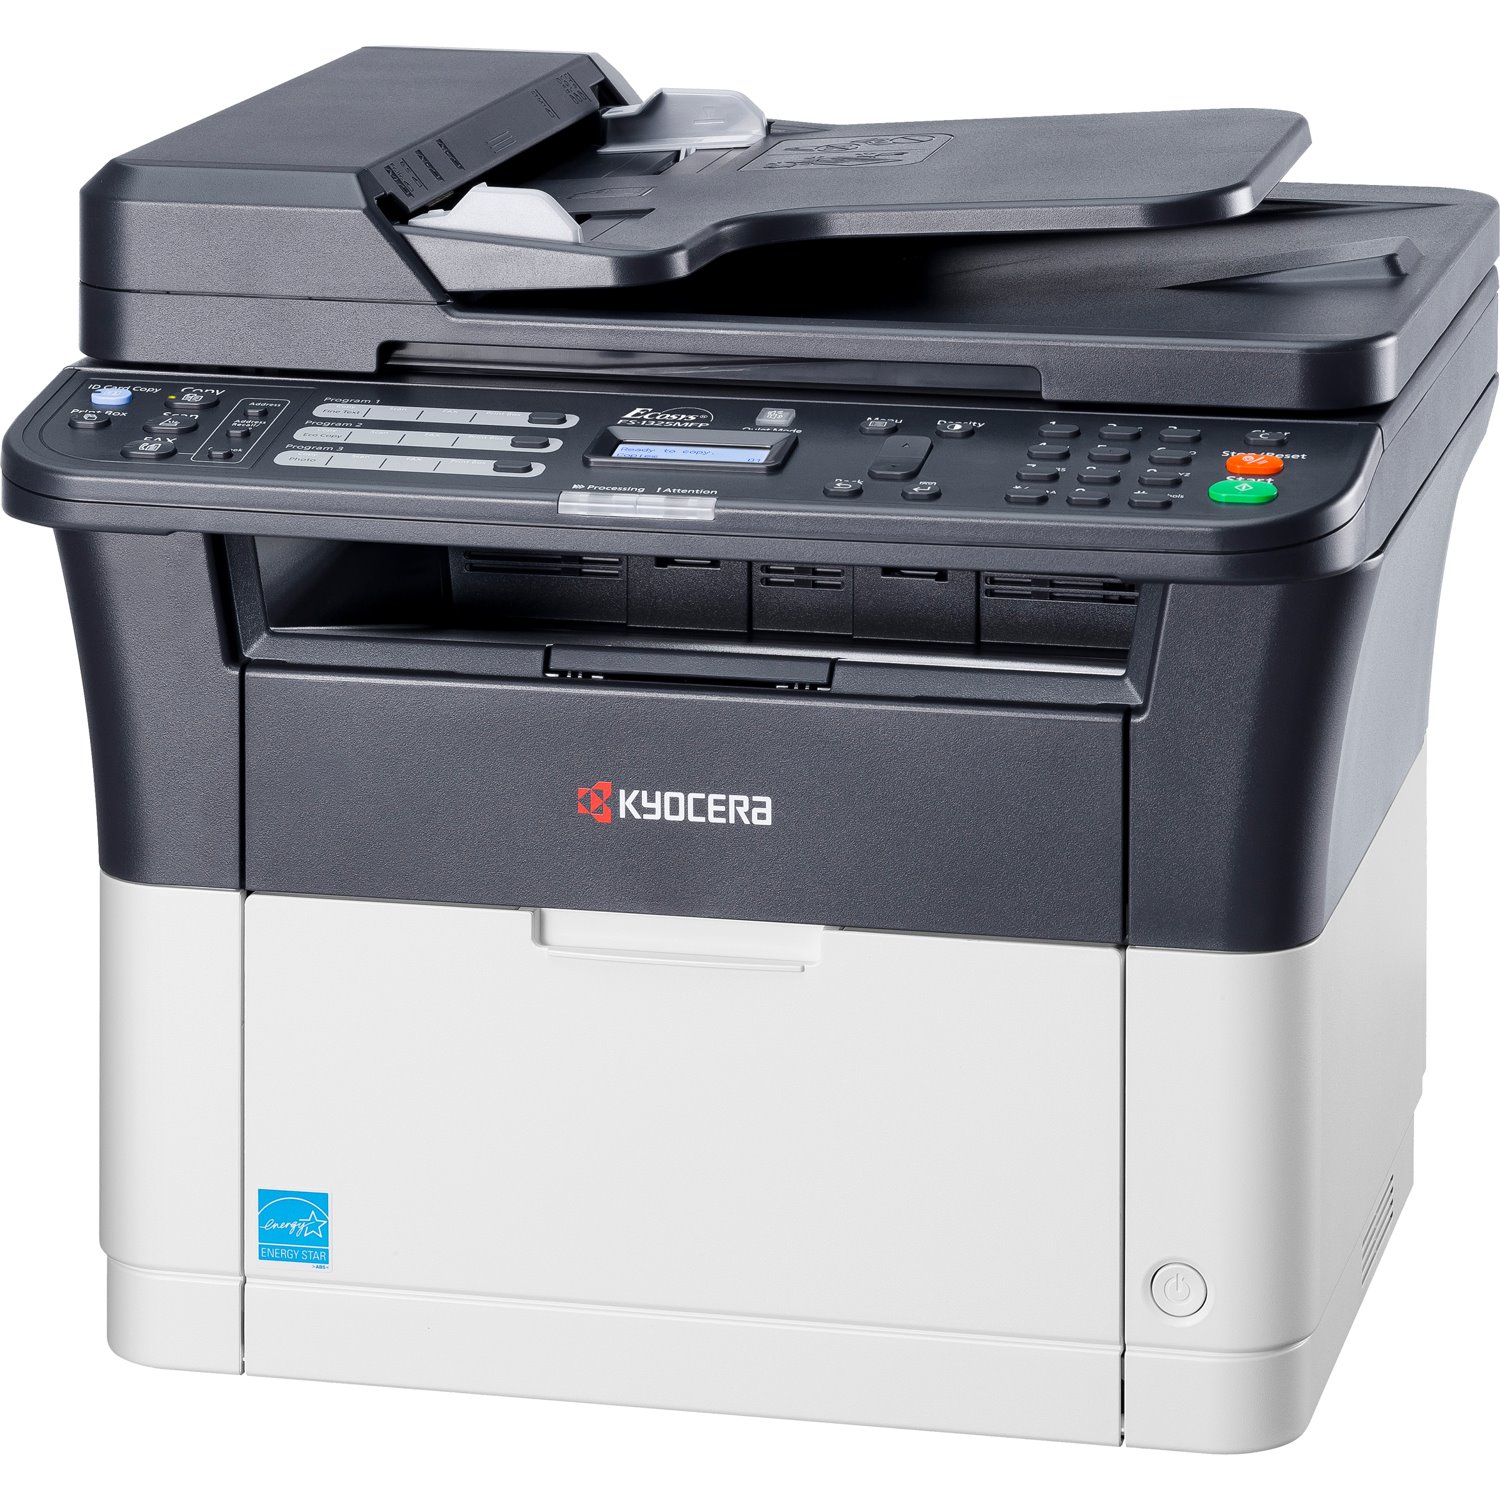 Kyocera Ecosys FS-1325MFP Laser Multifunction Printer - Monochrome